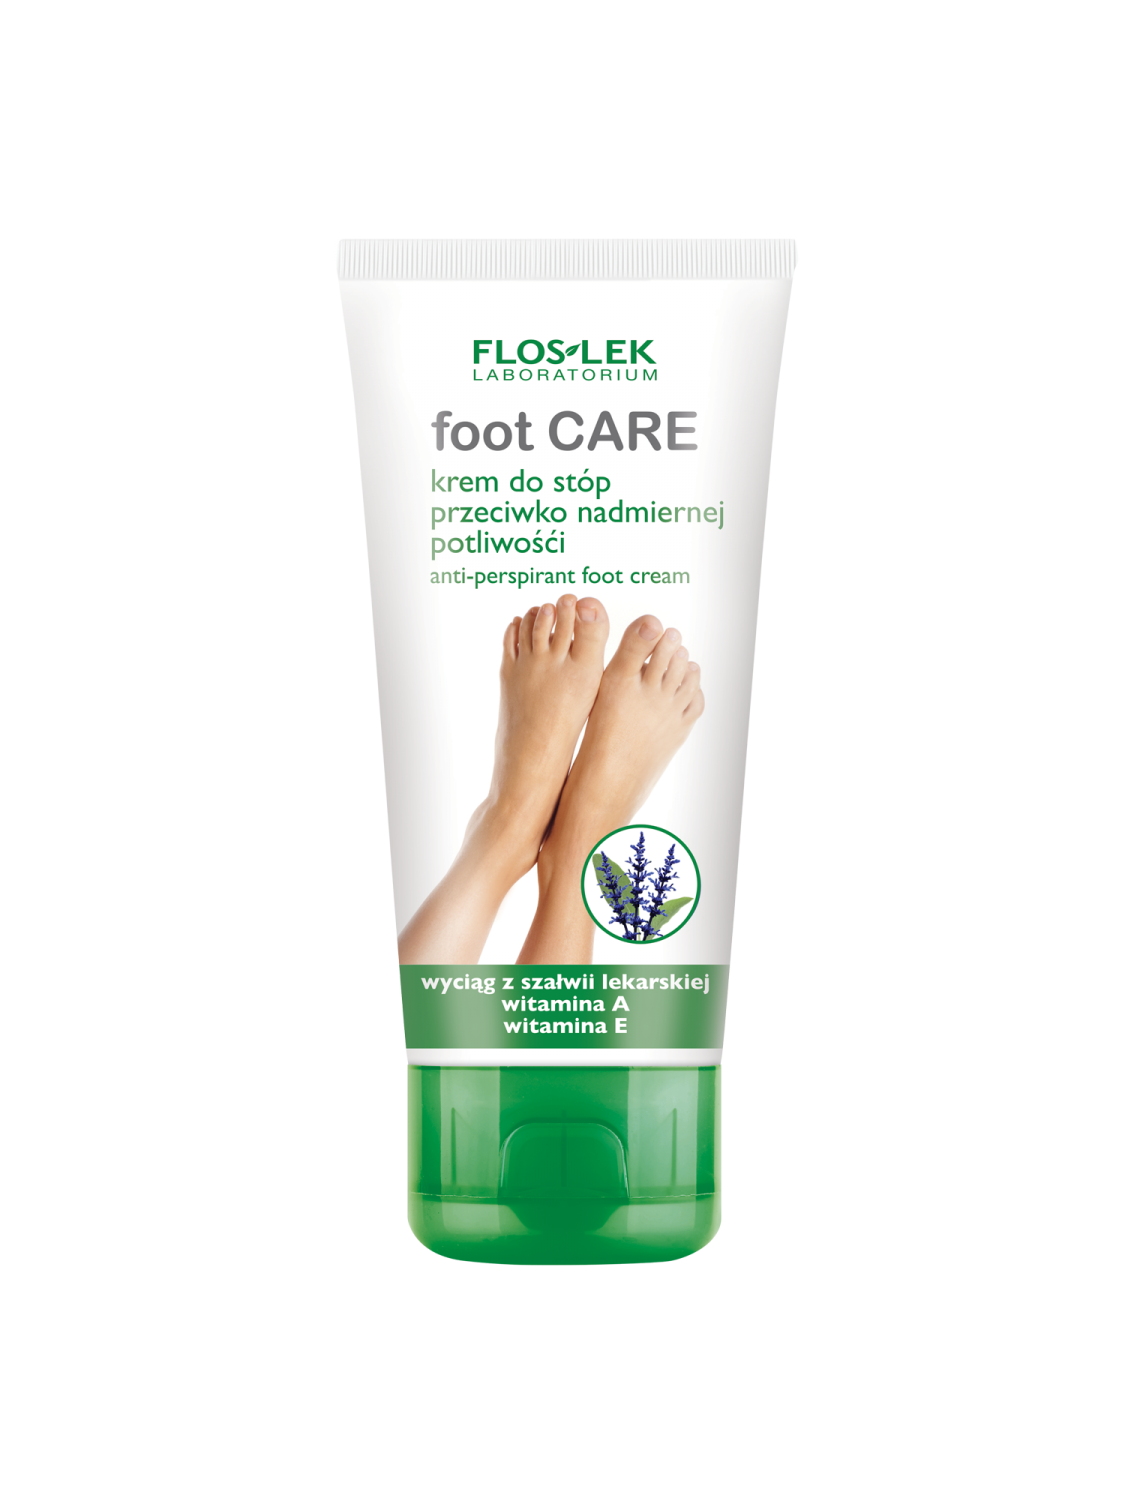 Floslek Foot Care foot cream against excessive sweating